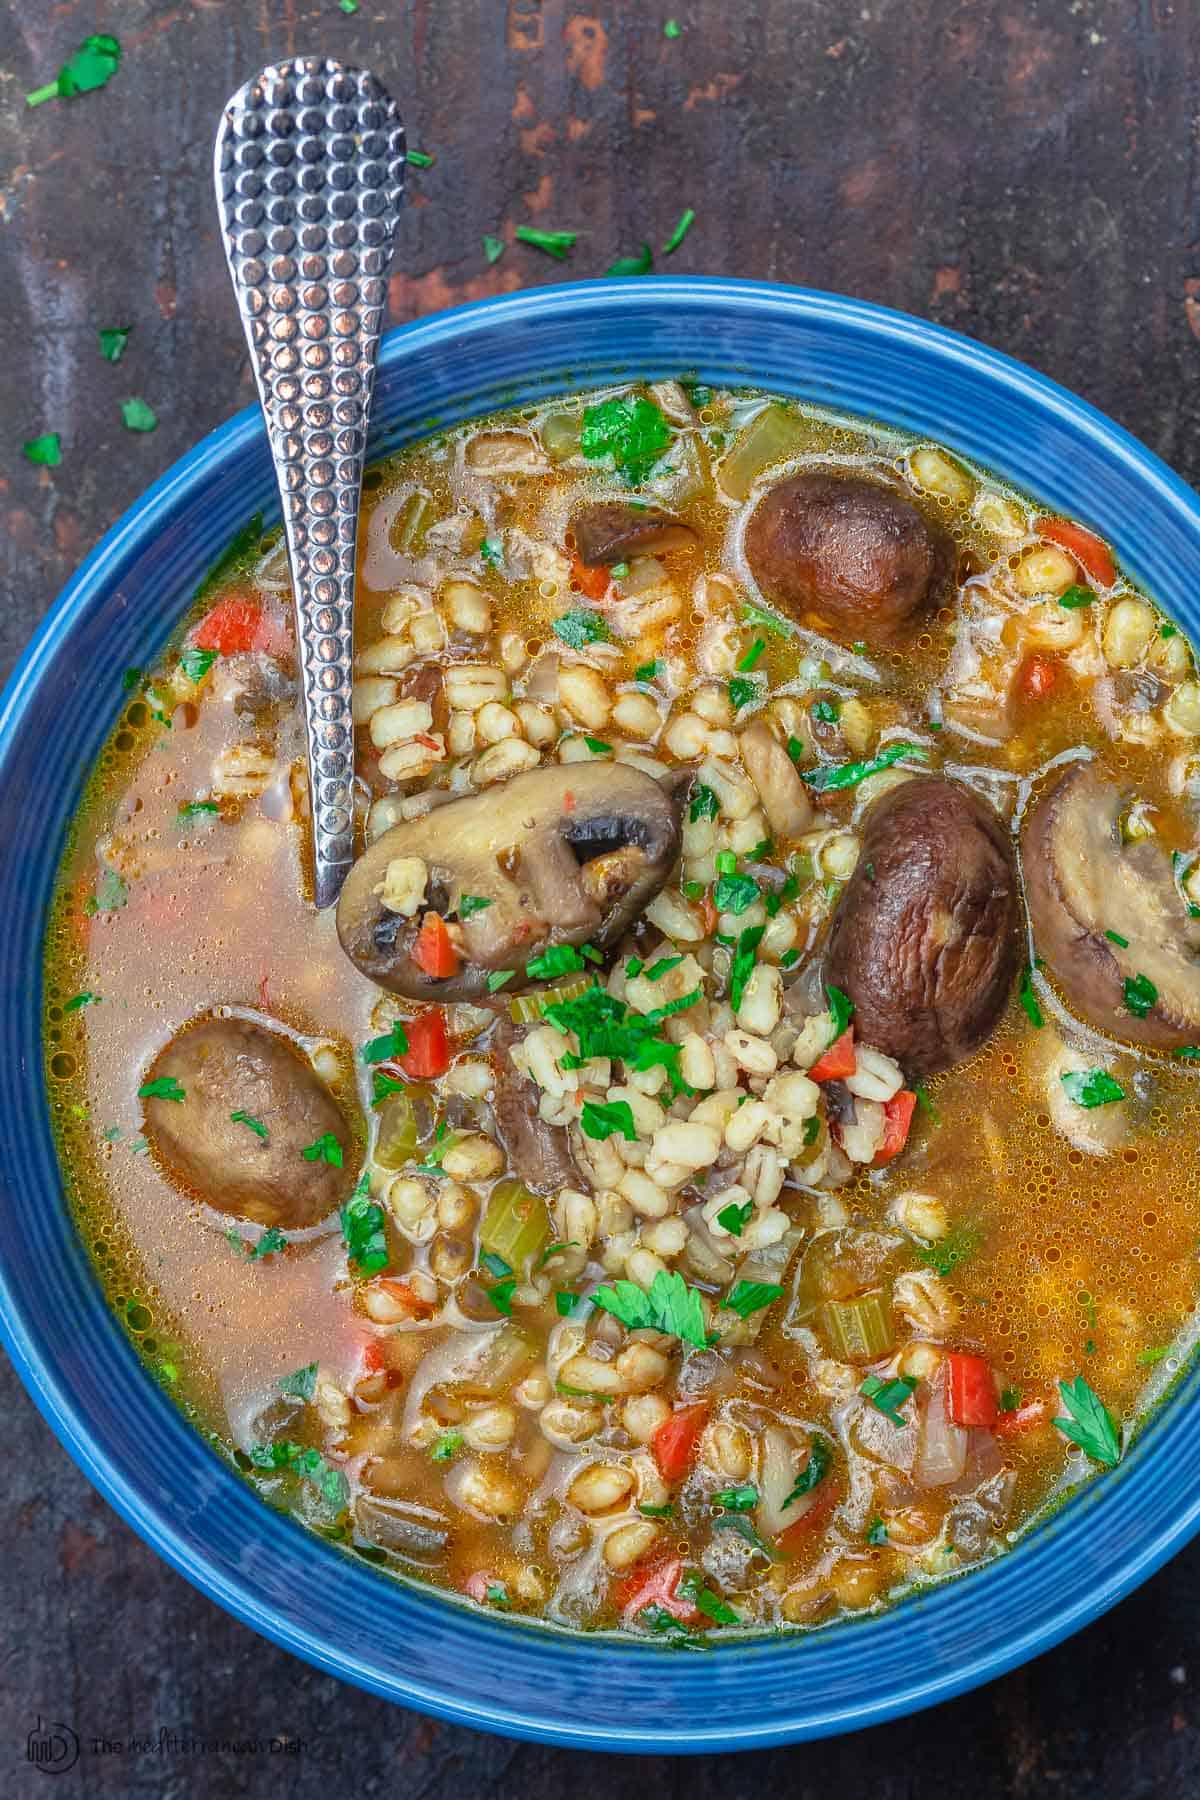 https://www.themediterraneandish.com/wp-content/uploads/2020/04/Mushroom-barley-soup-recipe-7.jpg